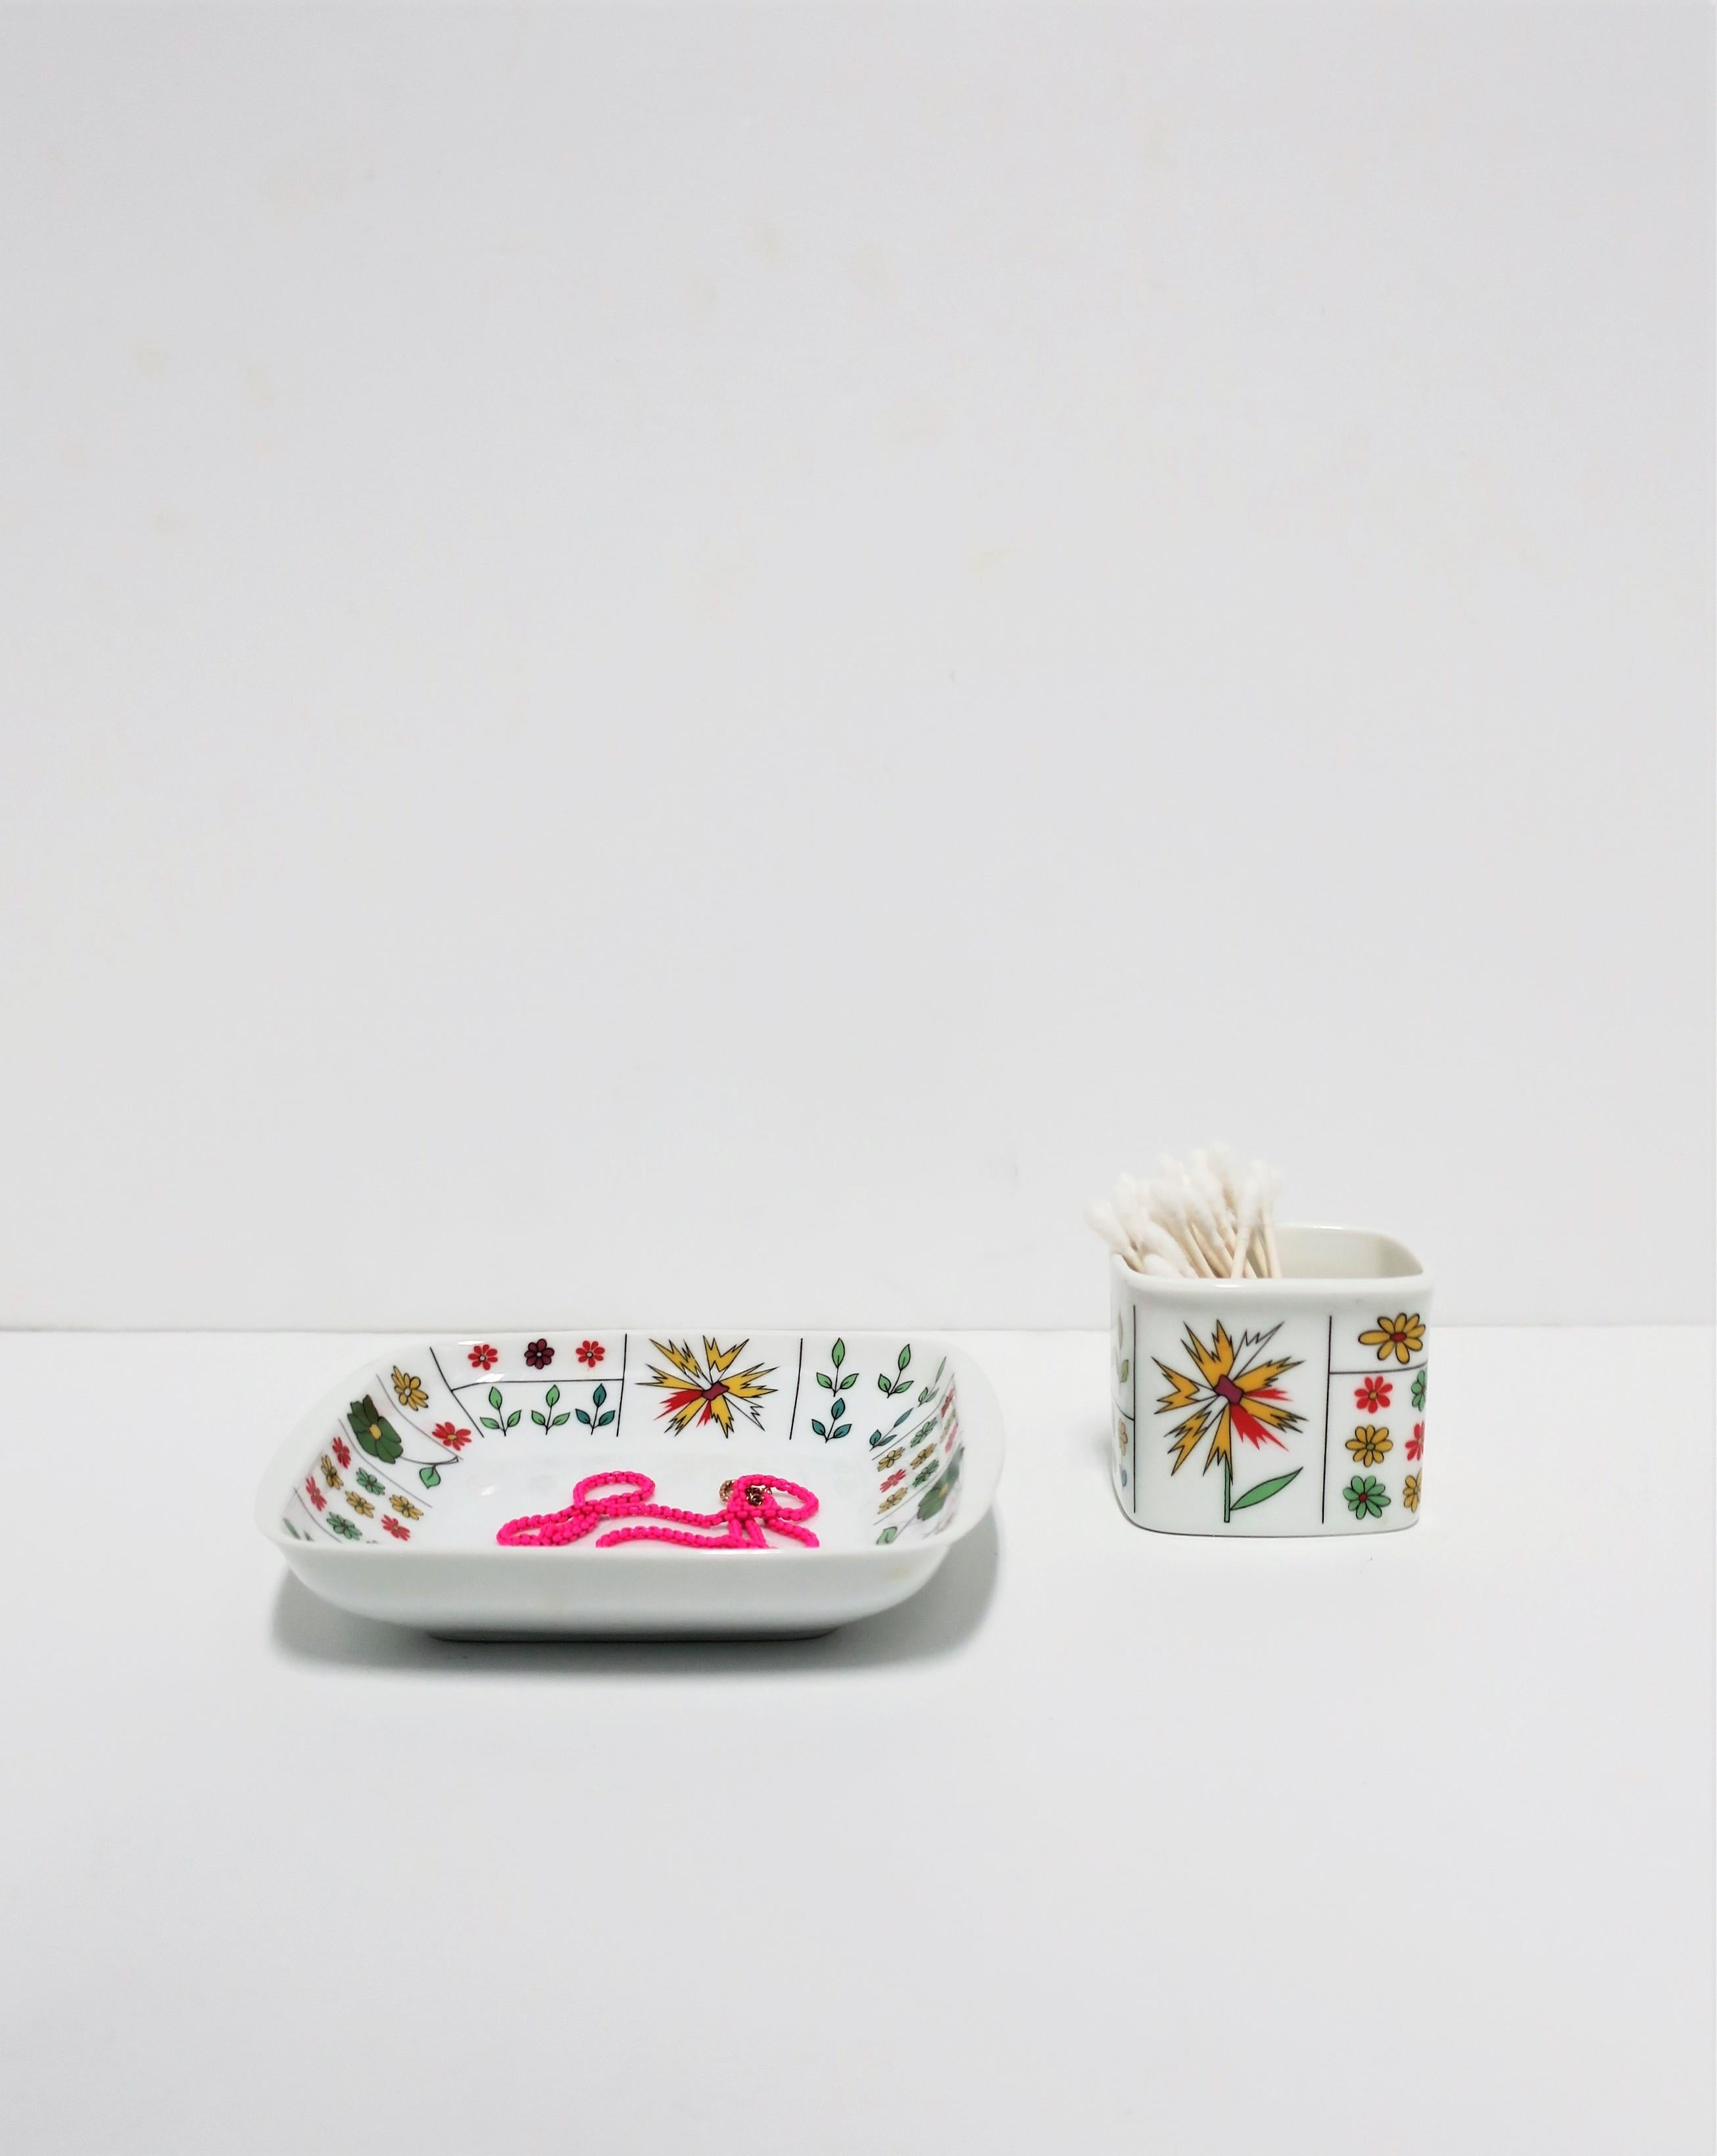 Emilio Pucci Porcelain Vide-Poche Catchall for Rosenthal Studio-Line 2